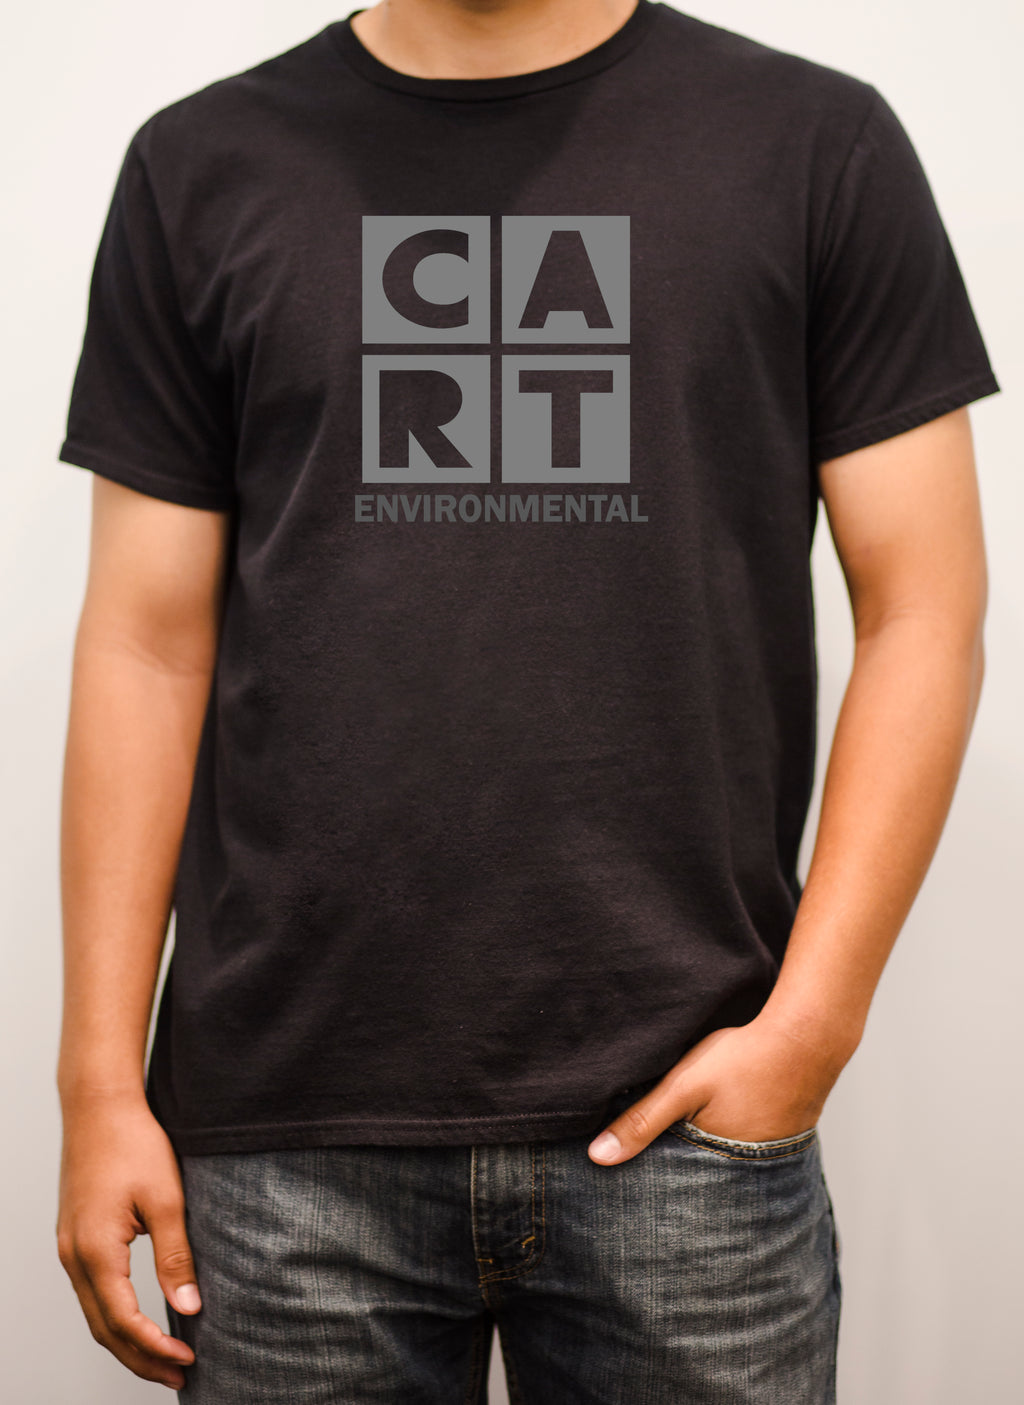 Short sleeve t-shirt (Unisex fit) - Environmental black/grey logo